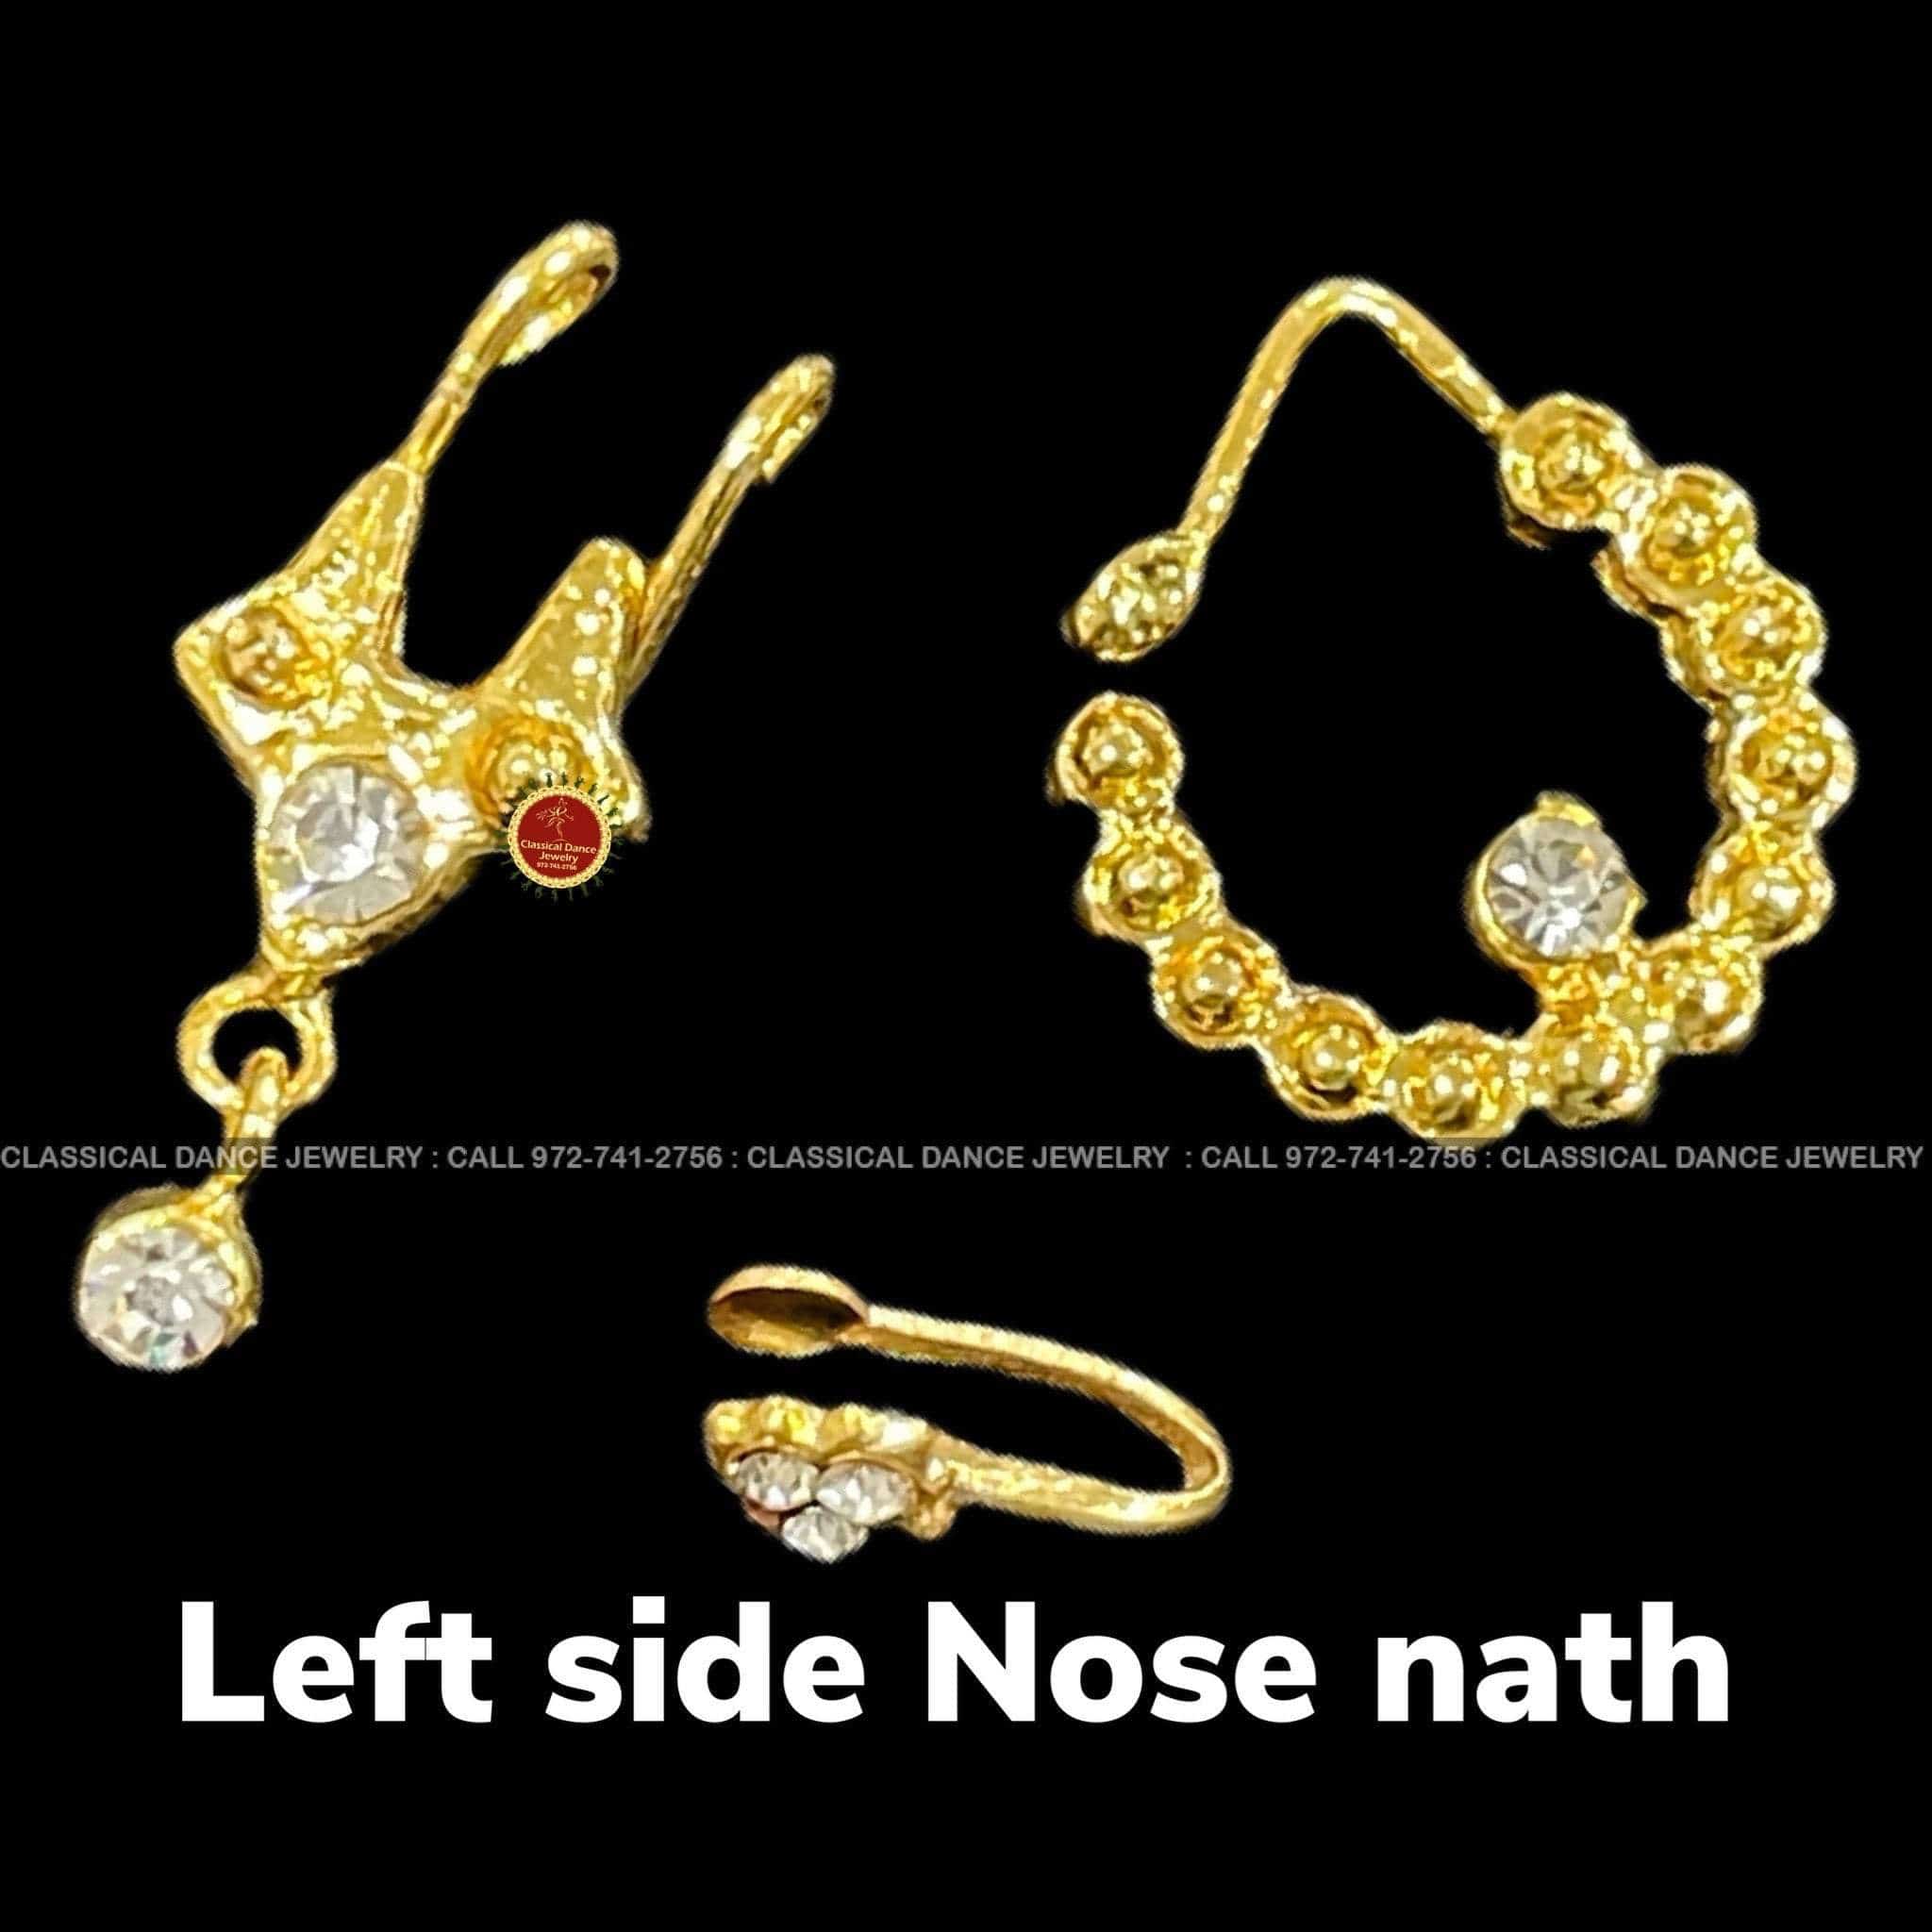 classical dance jewelry gold temple indian jewelry nose pin ring nath nathni nathu bullakku bharatnatyam kuchipudi weddings classical dance jewelry 30356571324581